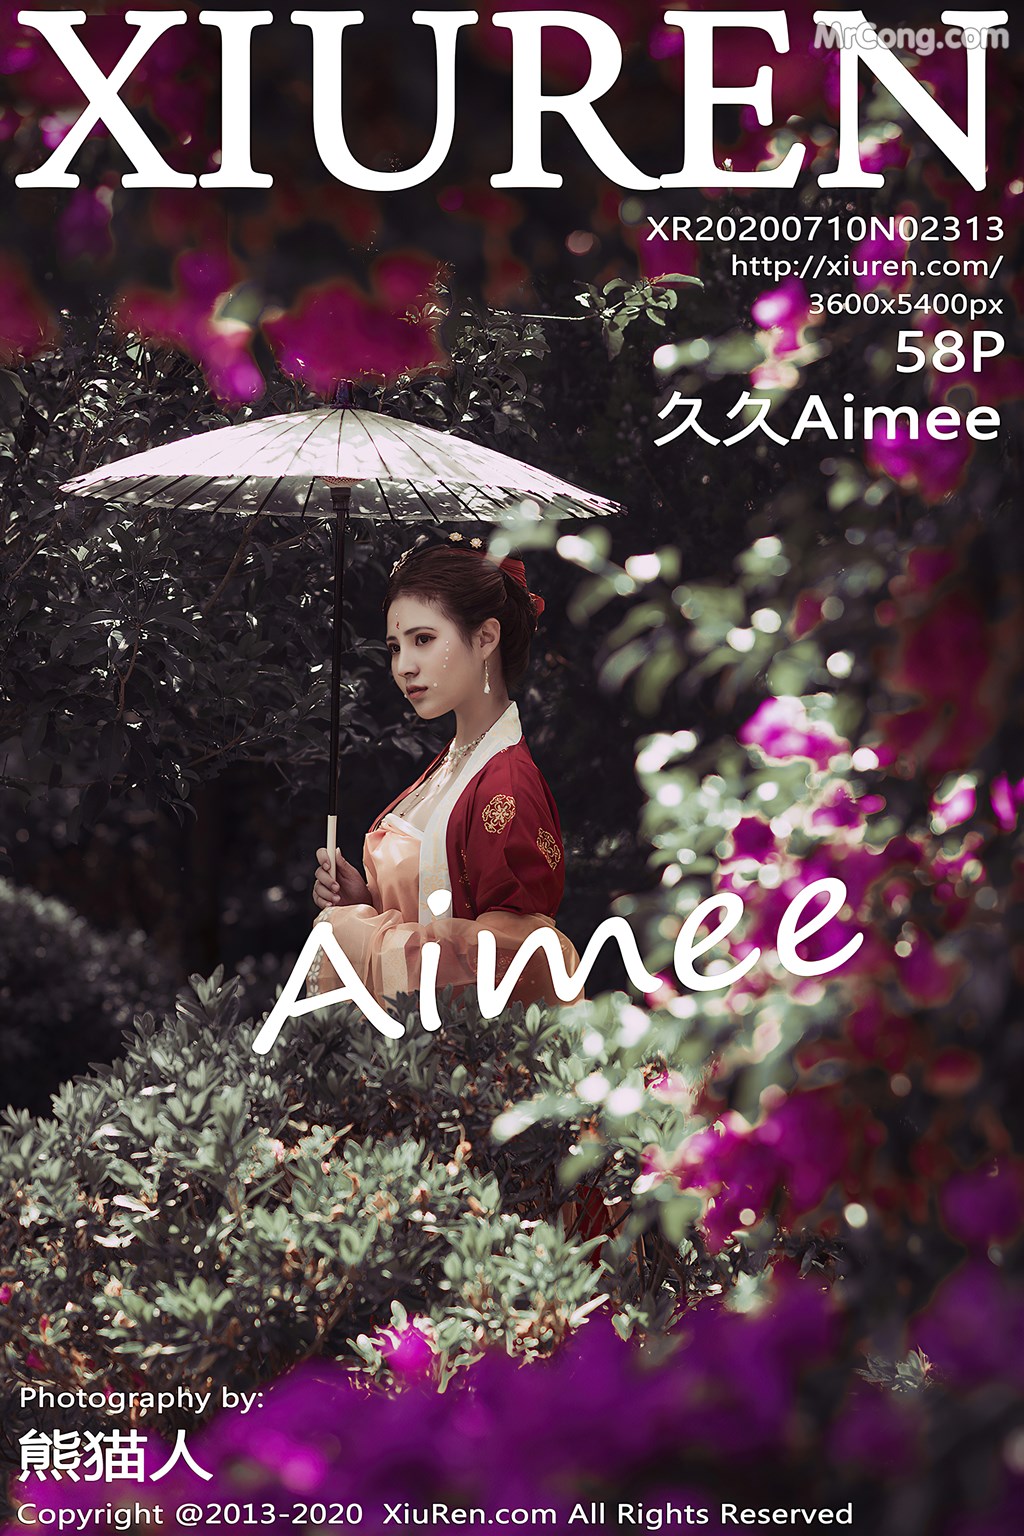 [XIUREN] No.2313 久久Aimee Cover Photo